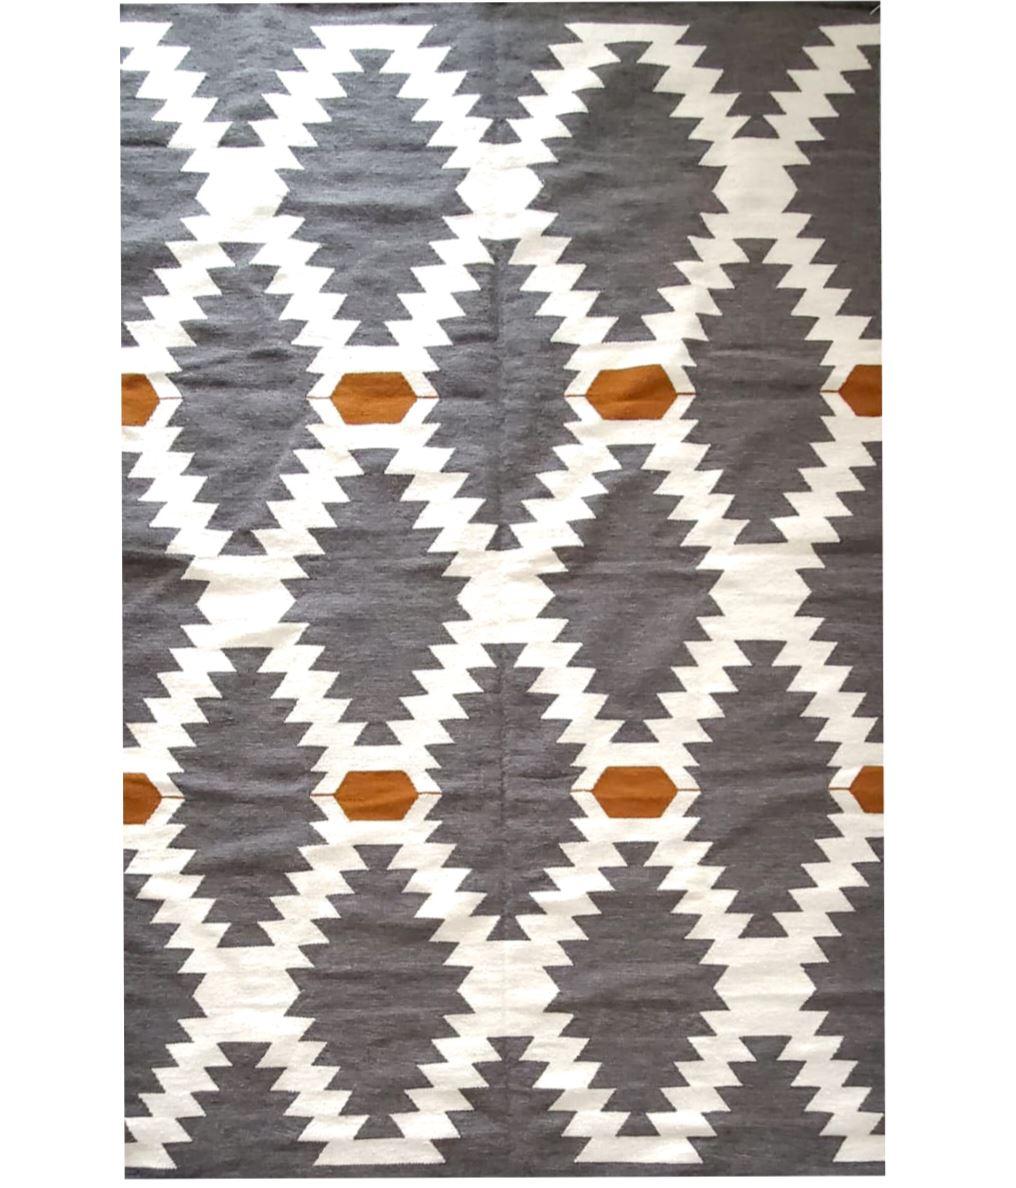 Egyptian Tanned Gray, Cream, and Brown Beni Handwoven Kilim |  Living Room Area Rug For Sale